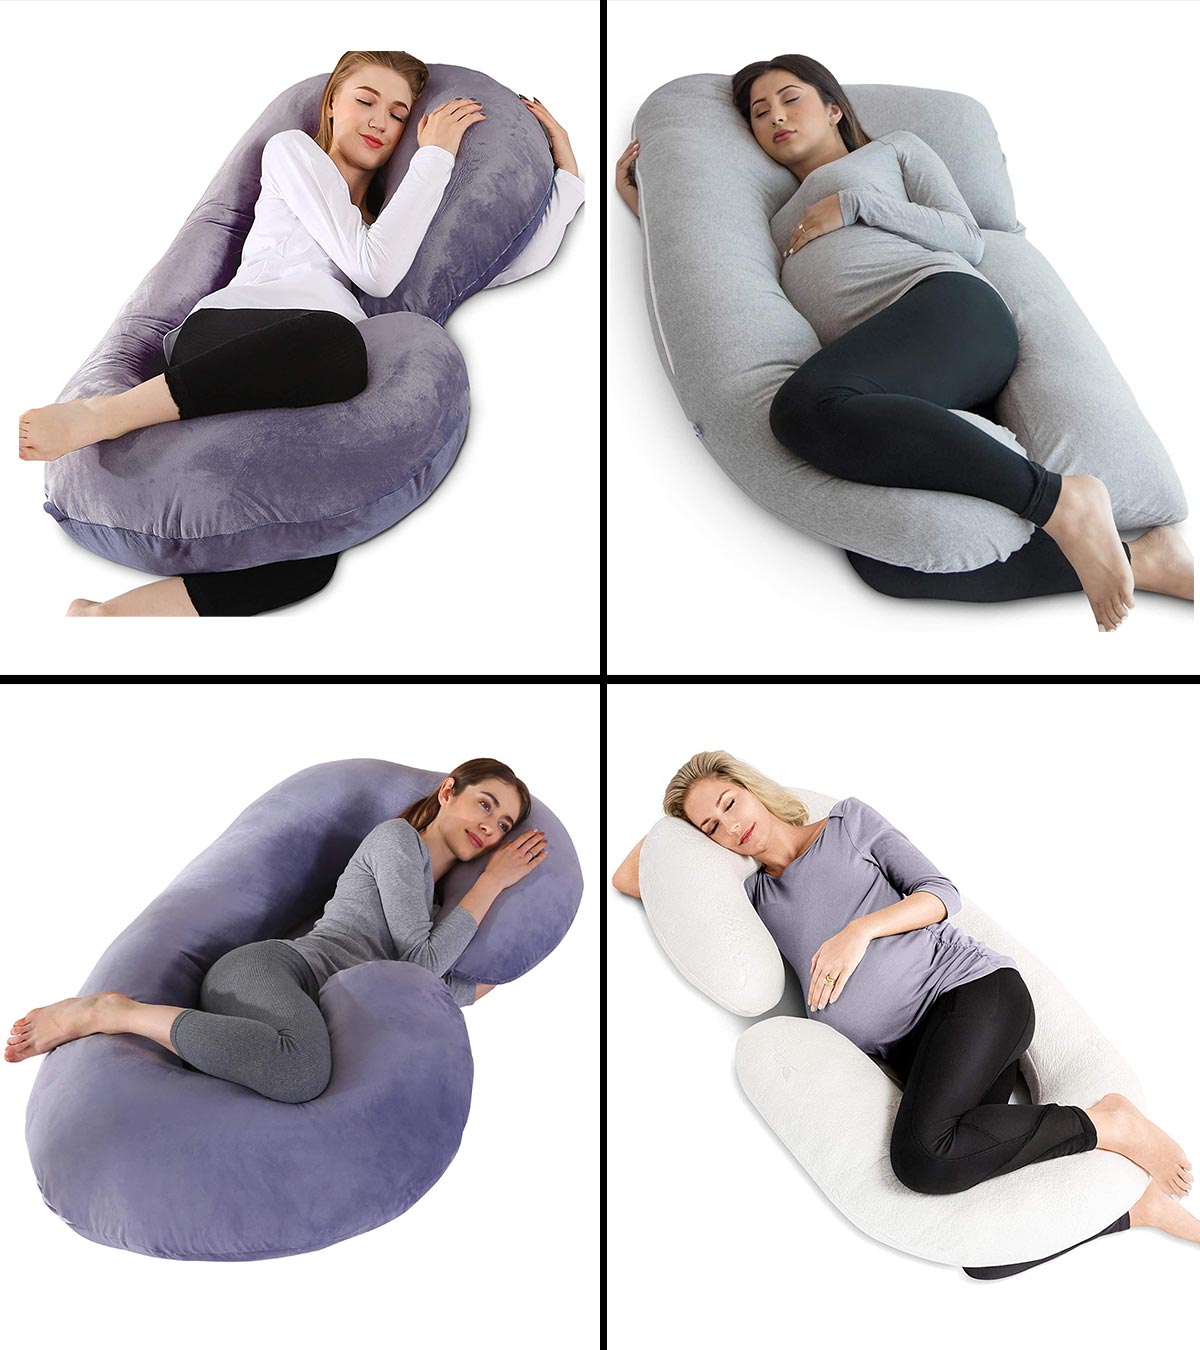 10 Best Pregnancy Pillows